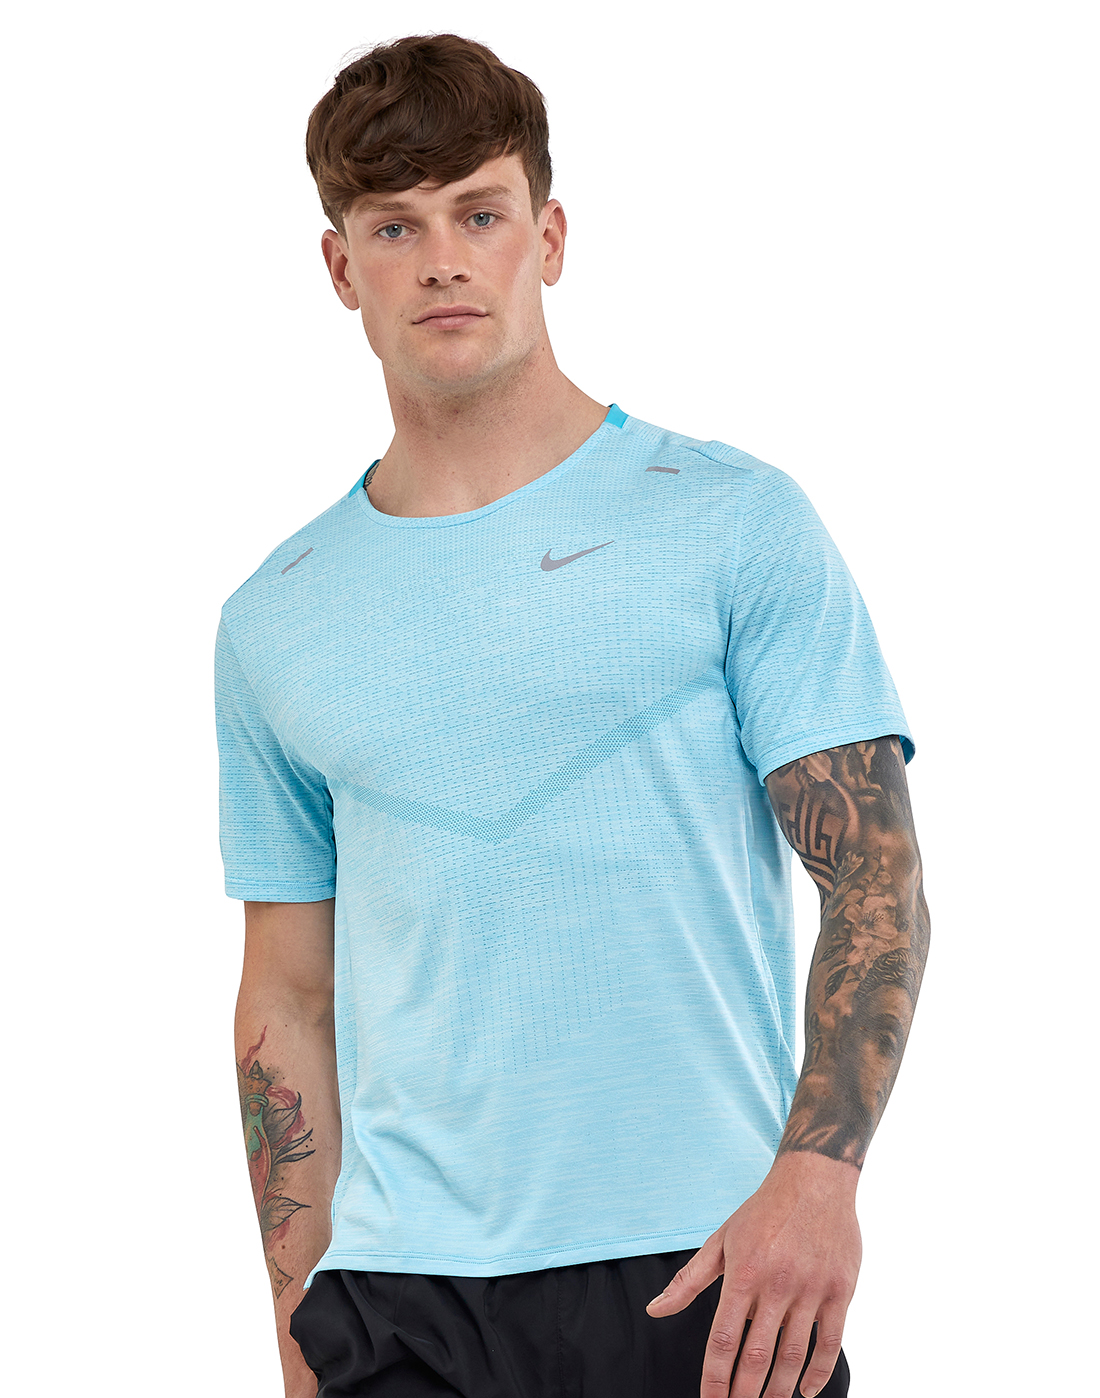 Nike Mens TechKnit Ultra T-Shirt - Blue | Life Style Sports IE